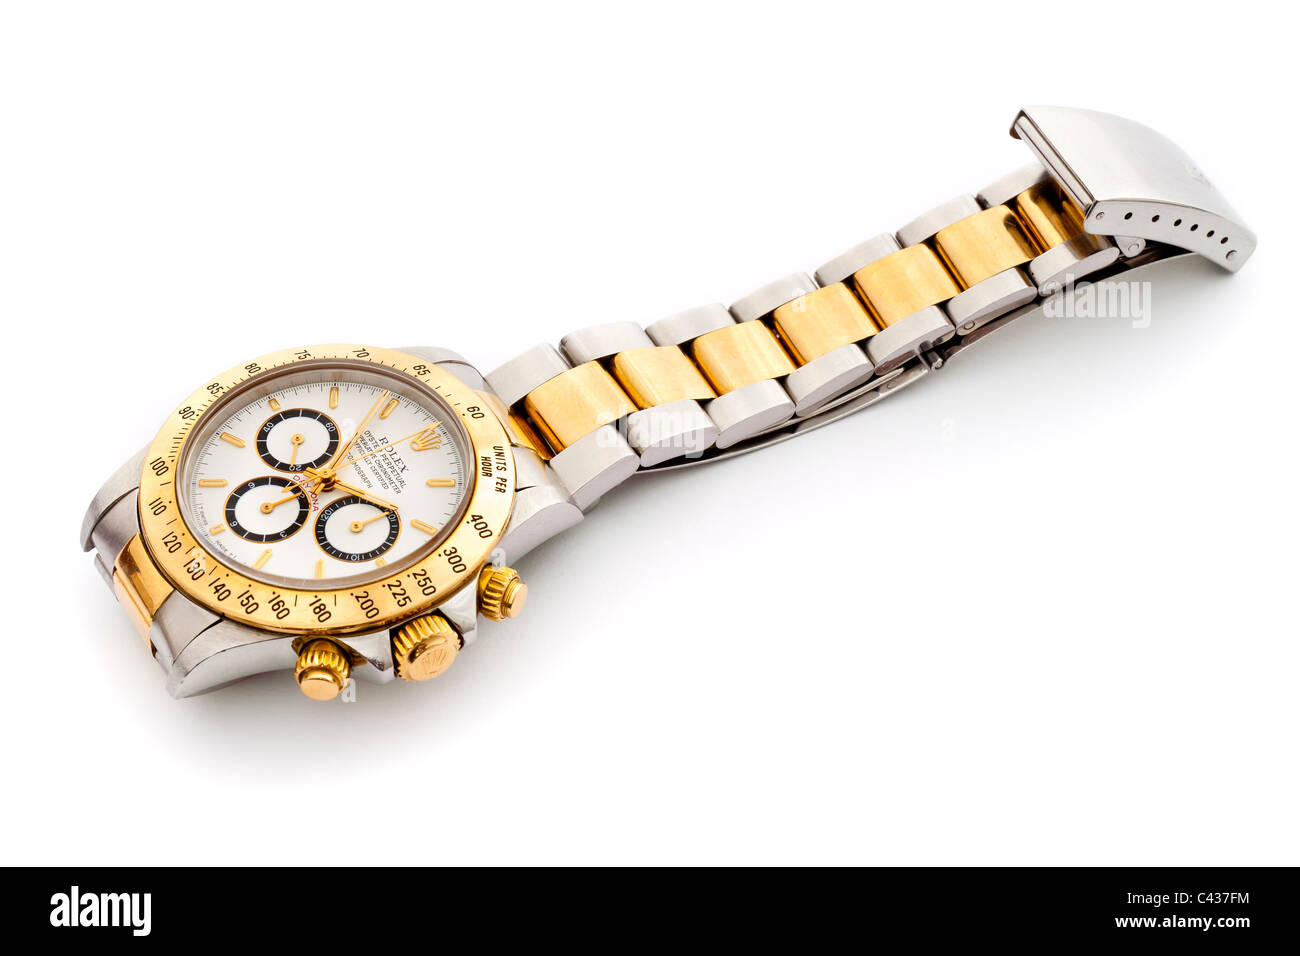 Rolex Daytona Cosmograph Oyster Perpetual Chronometer 18k Gold und Stahl Swiss Chronograph Armbanduhr mit weißem Zifferblatt JMH4899 Stockfoto